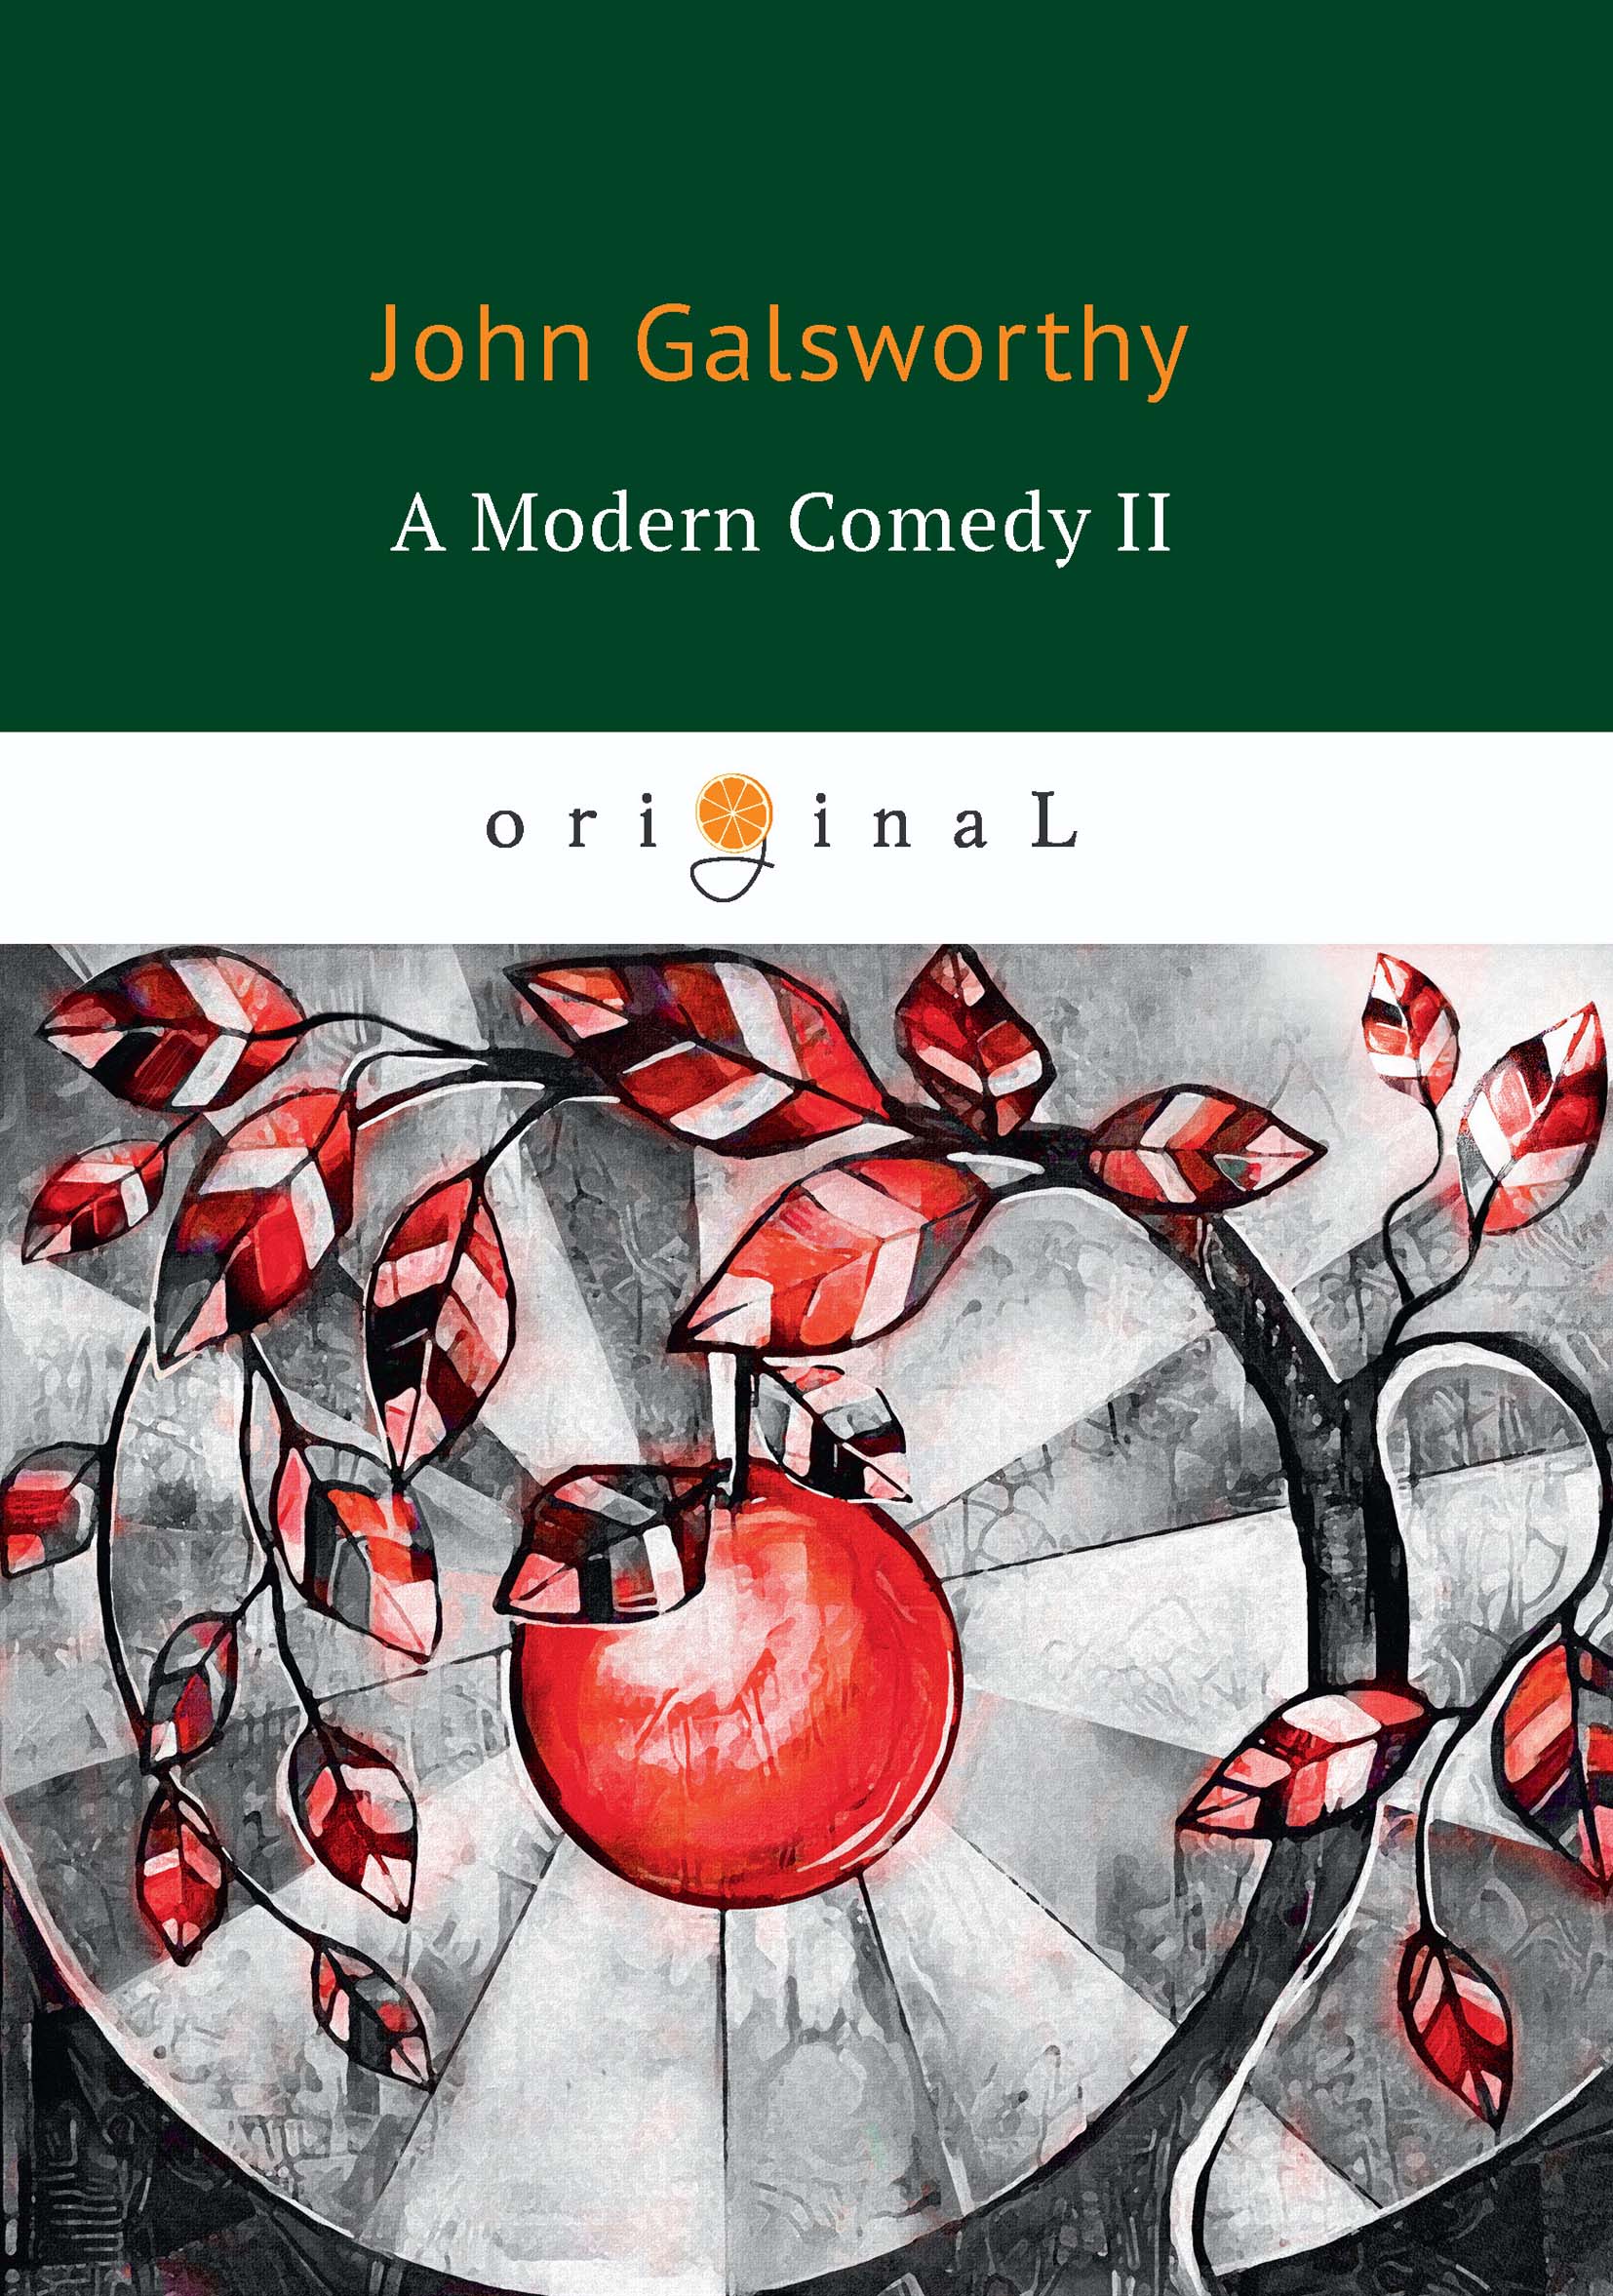 A Modern Comedy II. John Galsworthy